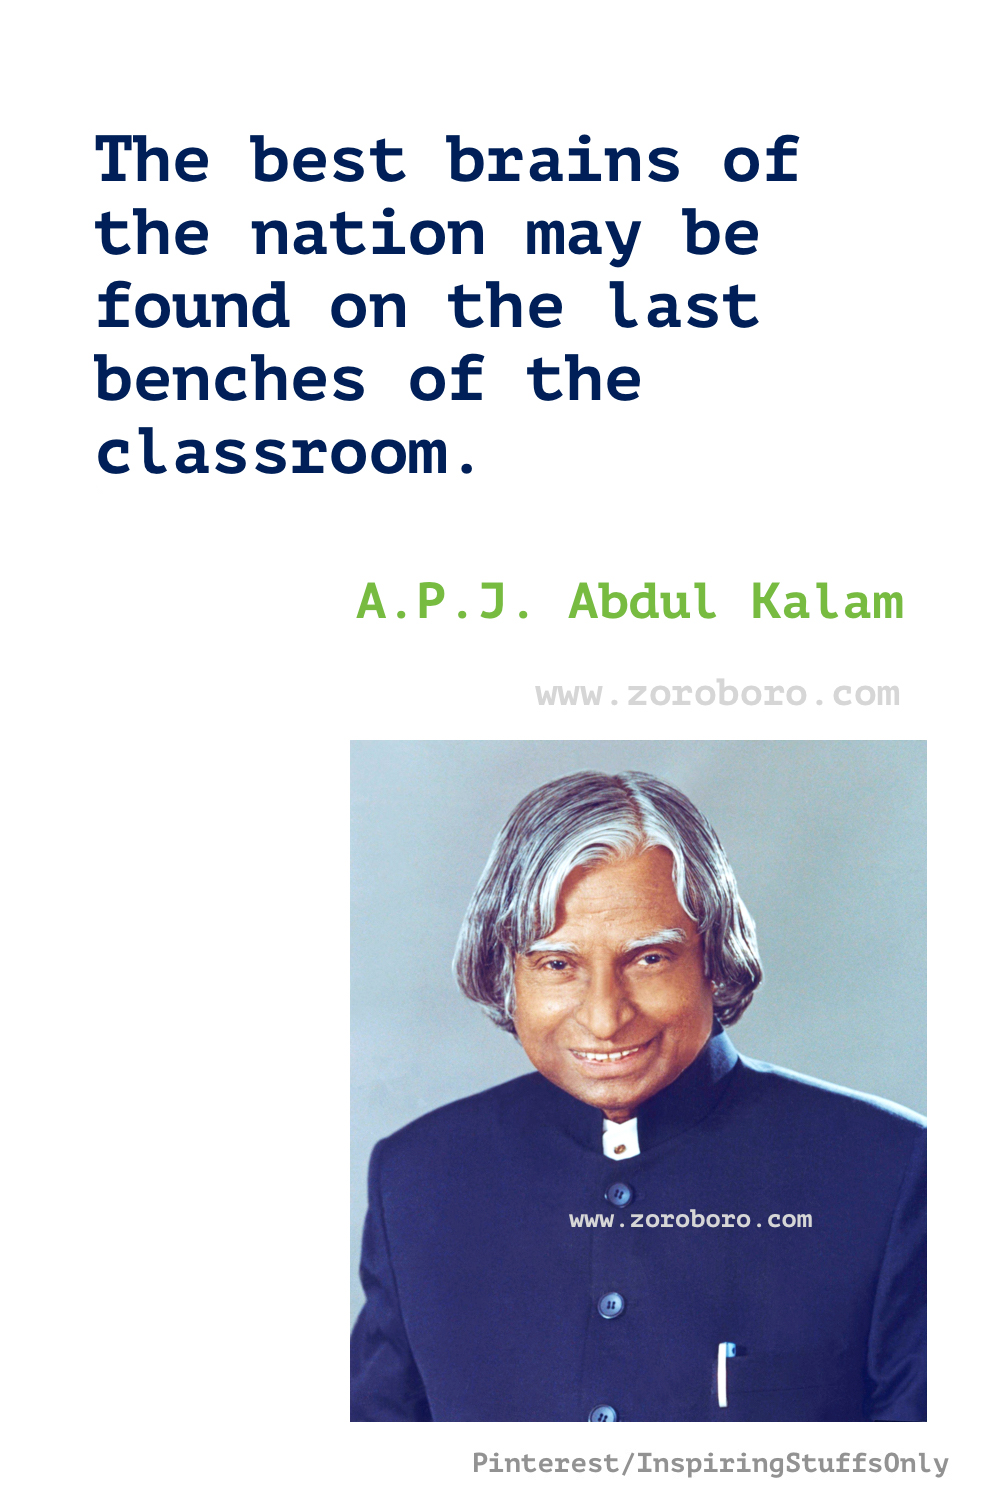 A.P.J. Abdul Kalam Quotes. A.P.J. Abdul Kalam DREAM Quotes, A.P.J. Abdul Kalam LIFE Quotes, LOVE Quotes, A.P.J. Abdul Kalam SCIENCE Quotes, A.P.J. Abdul Kalam EDUCATION Quotes & A.P.J. Abdul Kalam STUDENTS Quotes. A.P.J. Abdul Kalam Quotes in English, A.P.J. Abdul Kalam Inspirational & Motivational Quotes,backbencher quotes